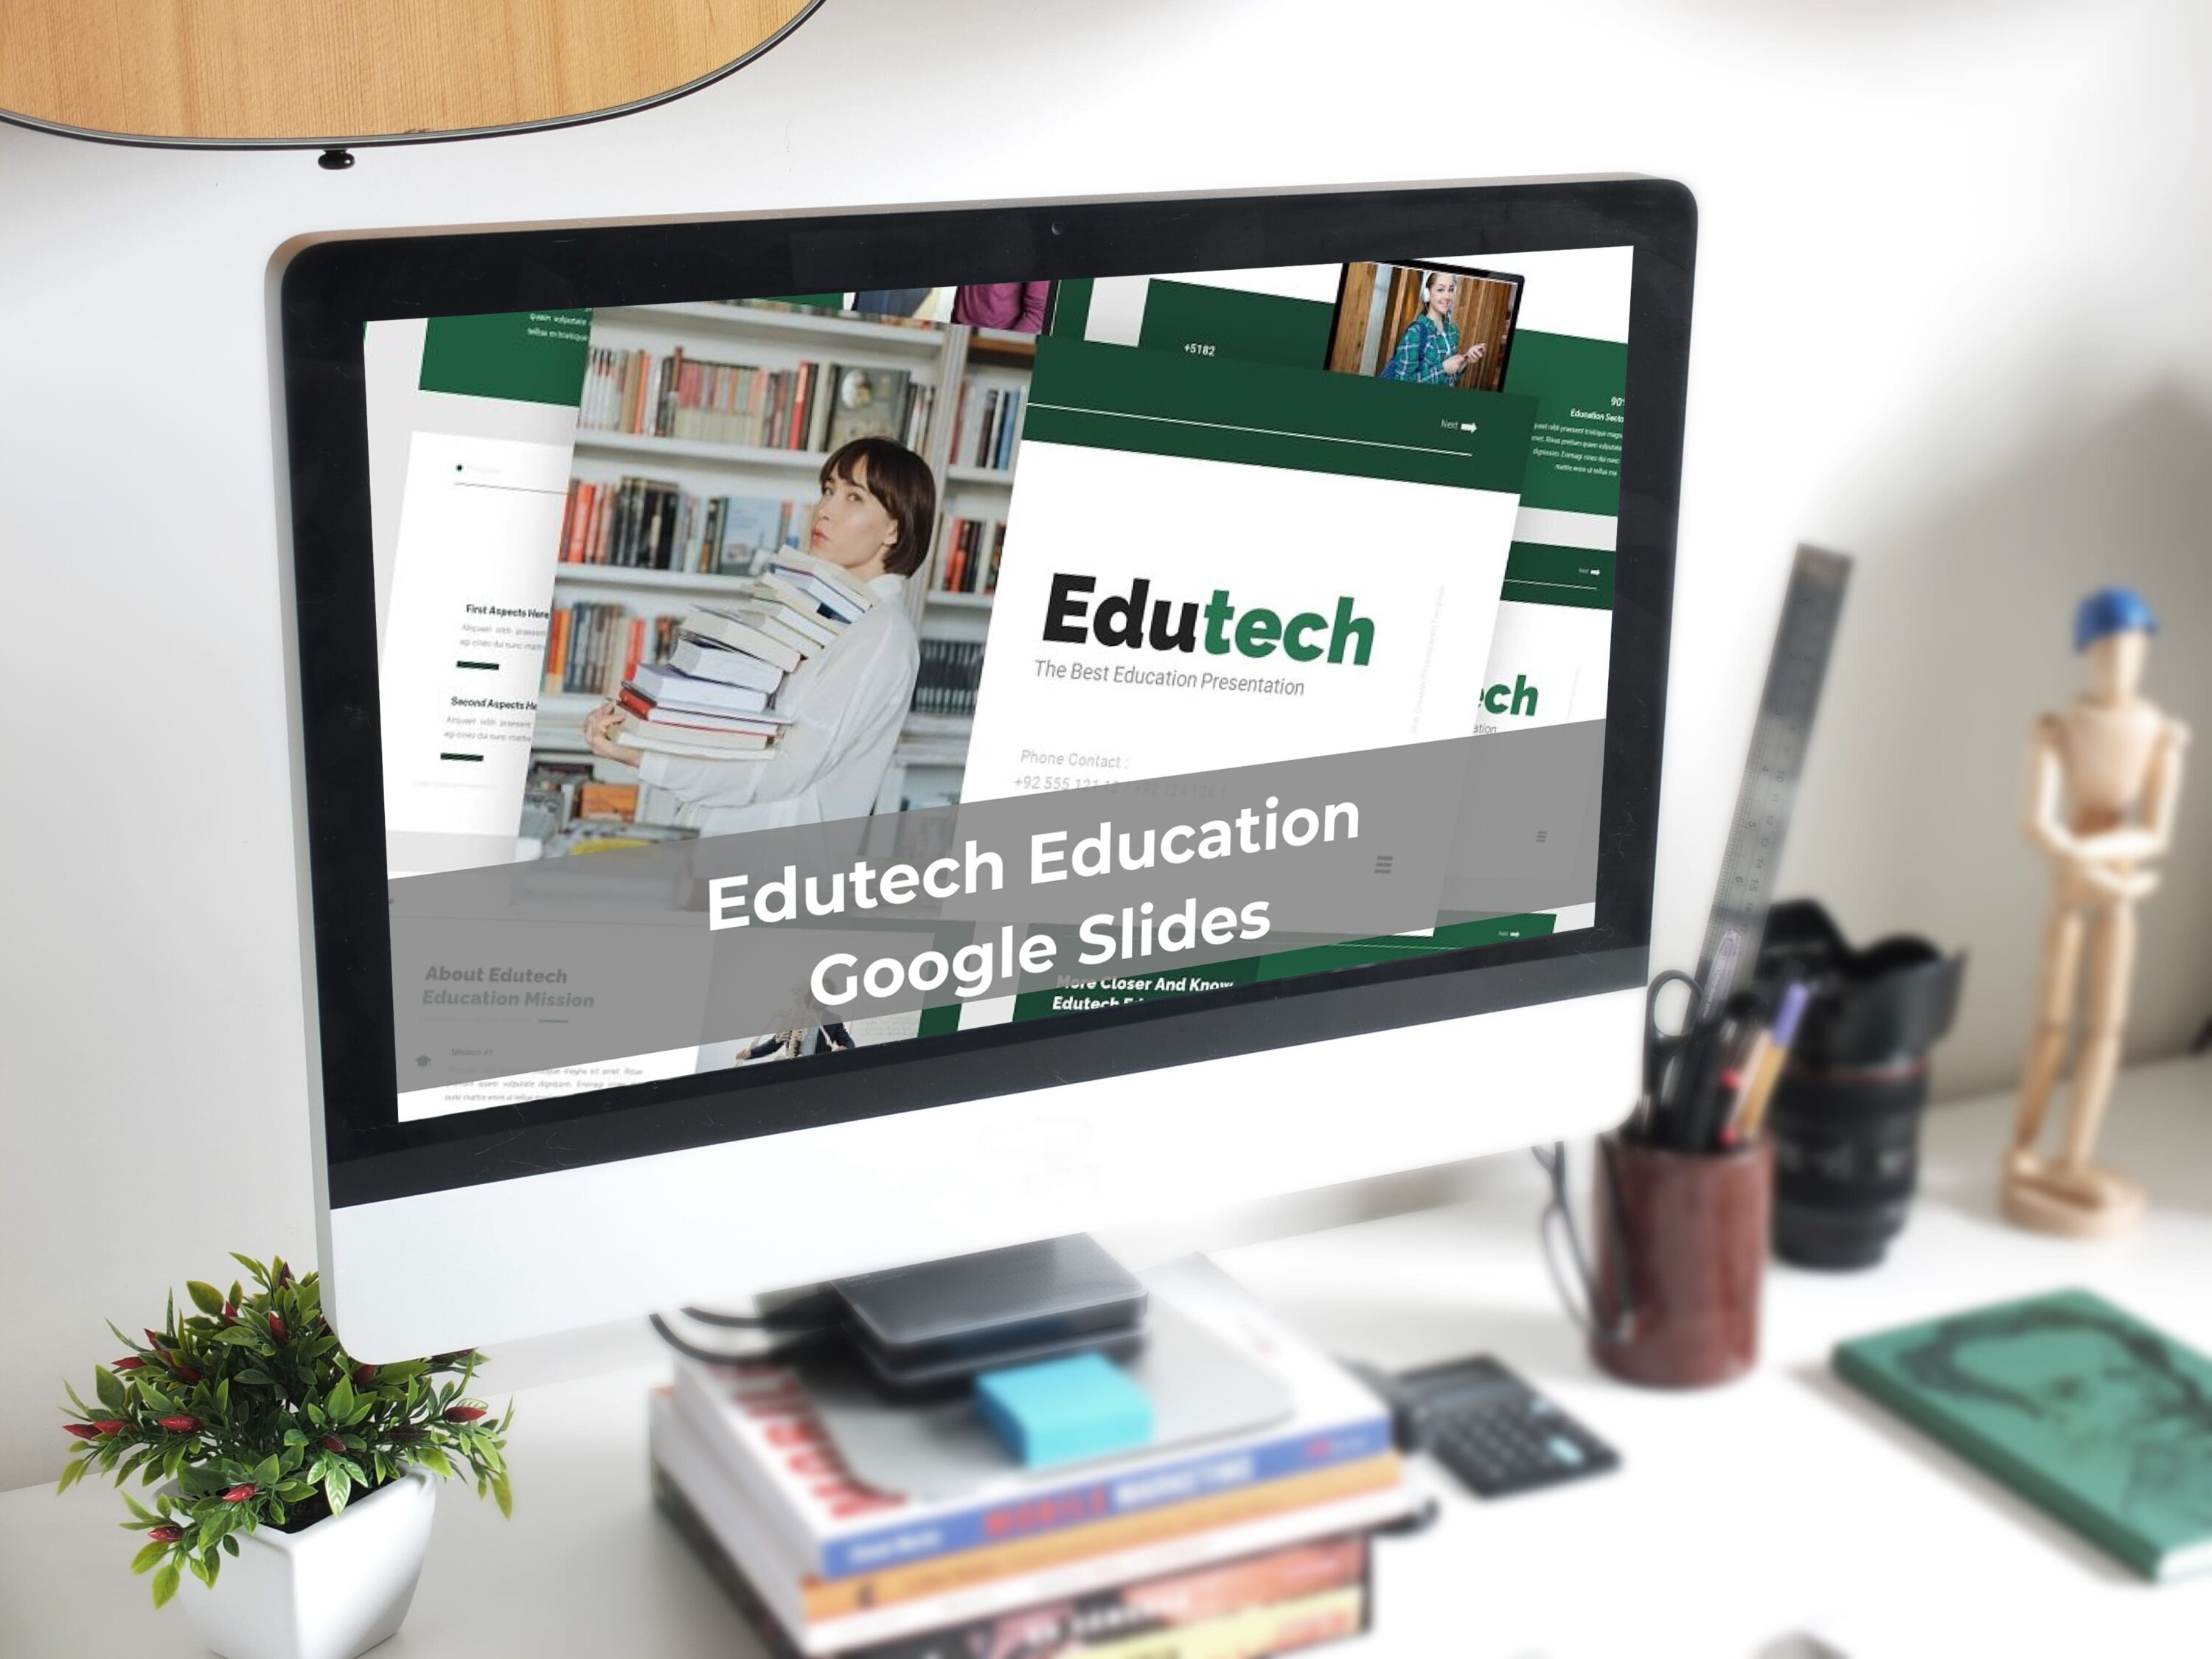 Edutech Education Google Slides - desktop.